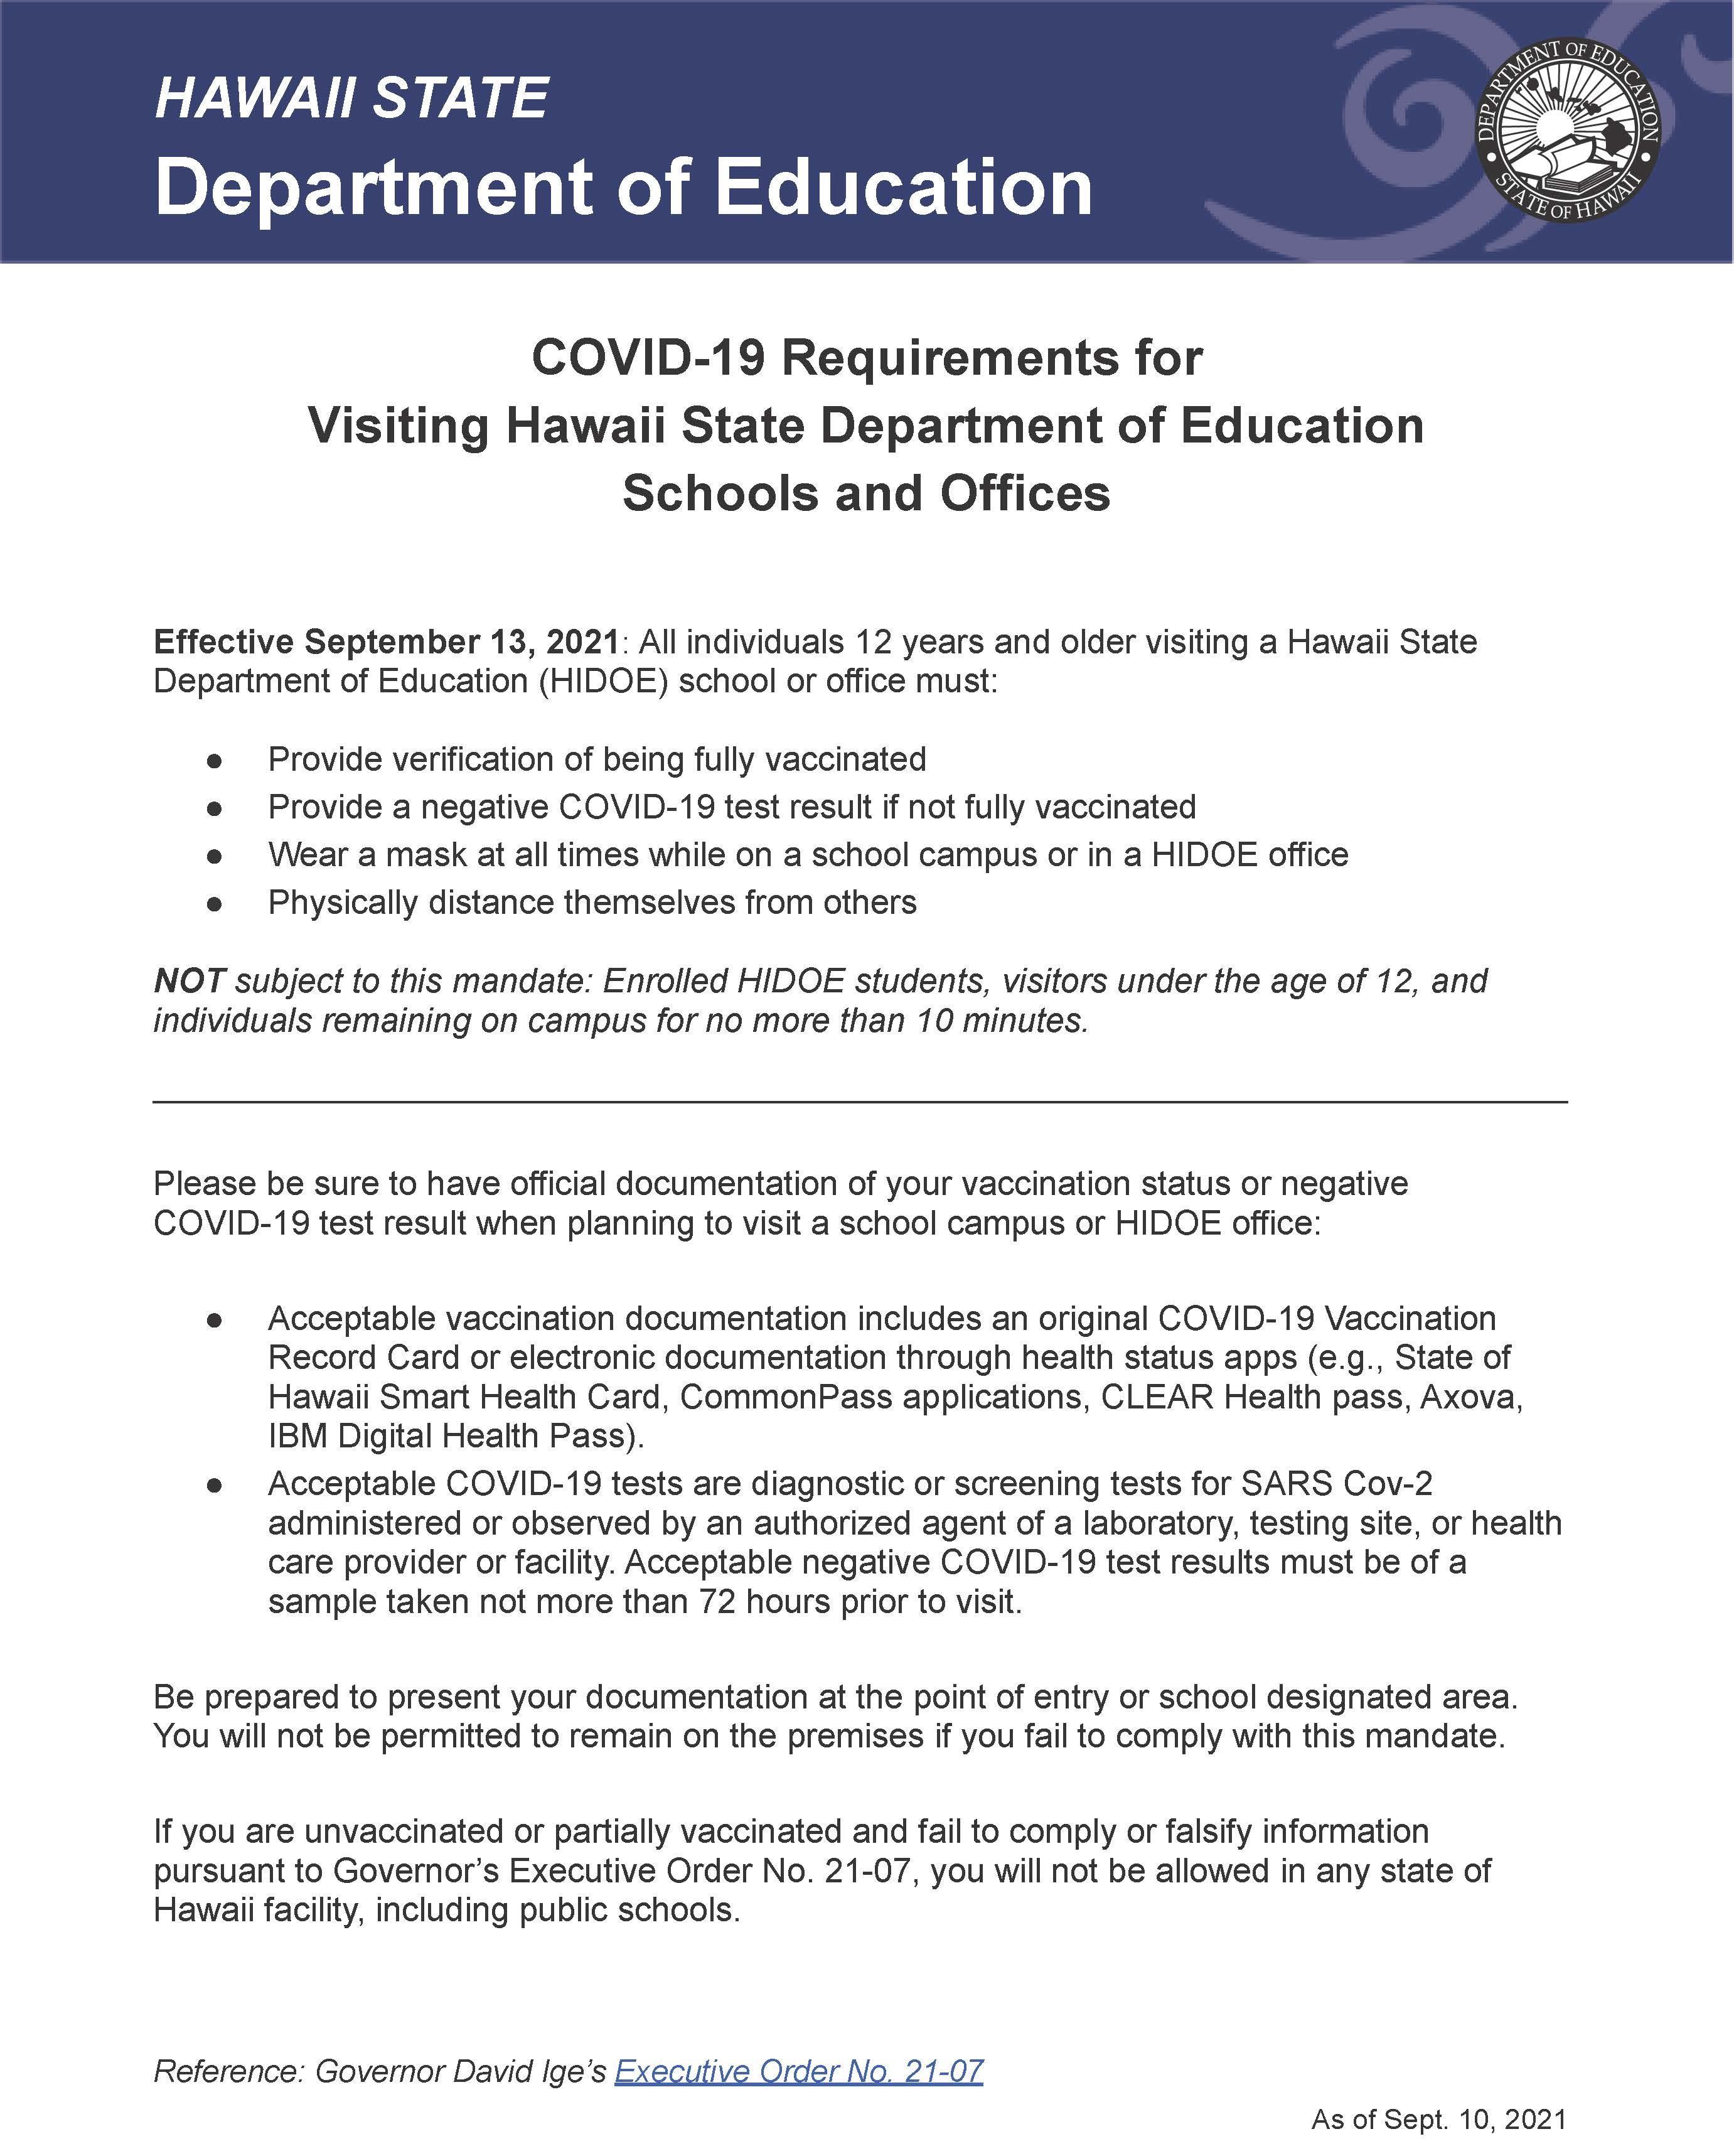 CV19 Requirements for Visiting Hawaiʻi DOE Schools & Offices